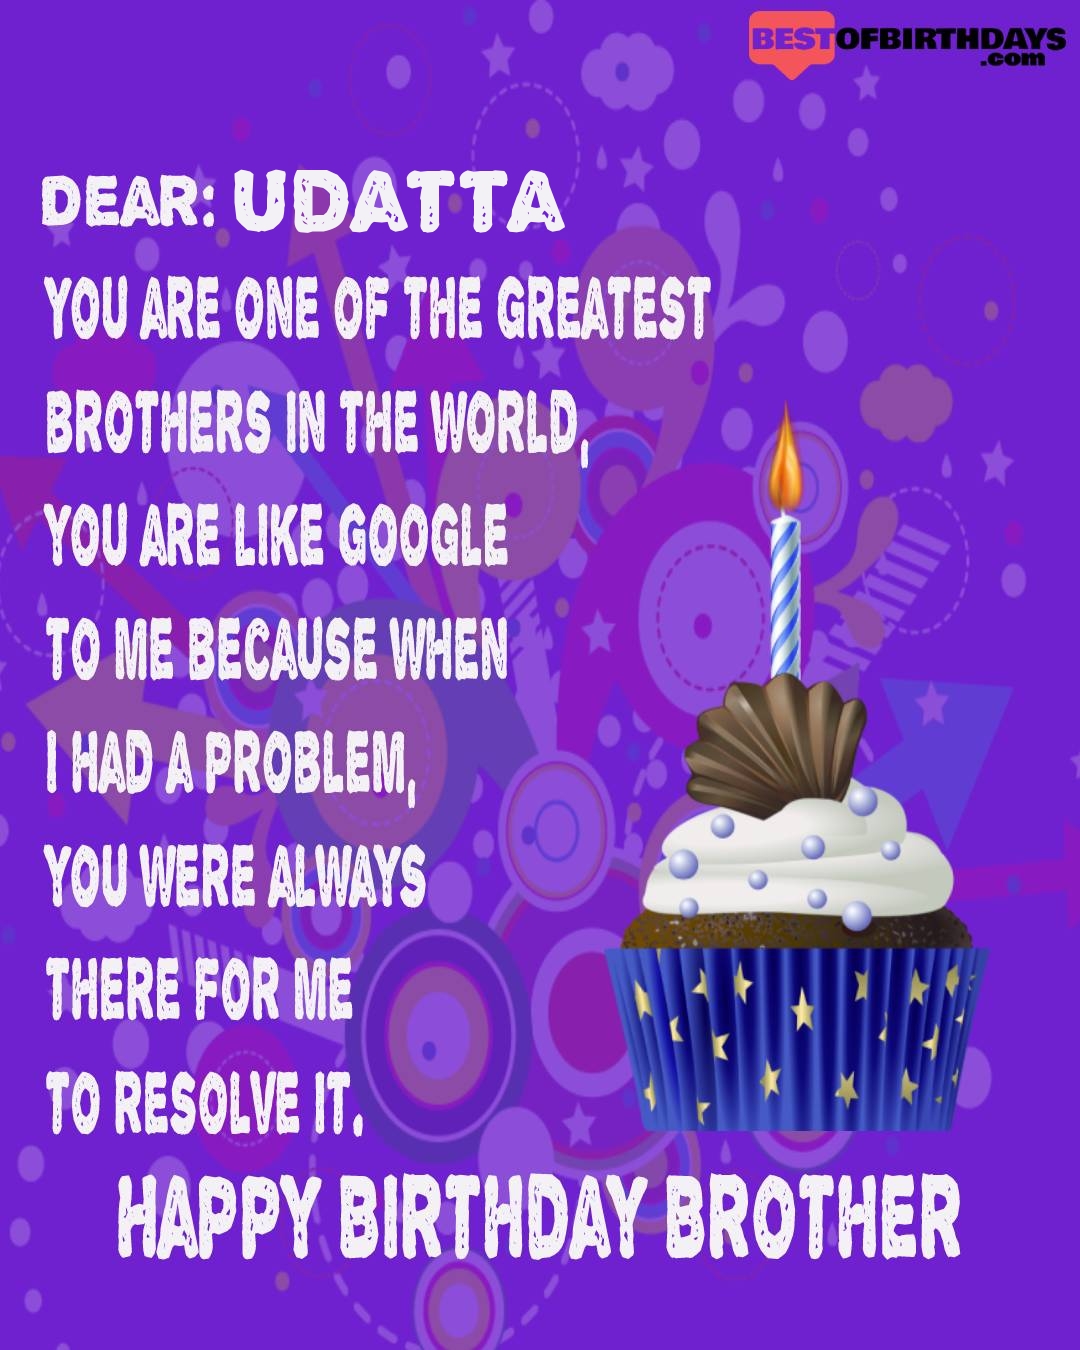 Happy birthday udatta bhai brother bro